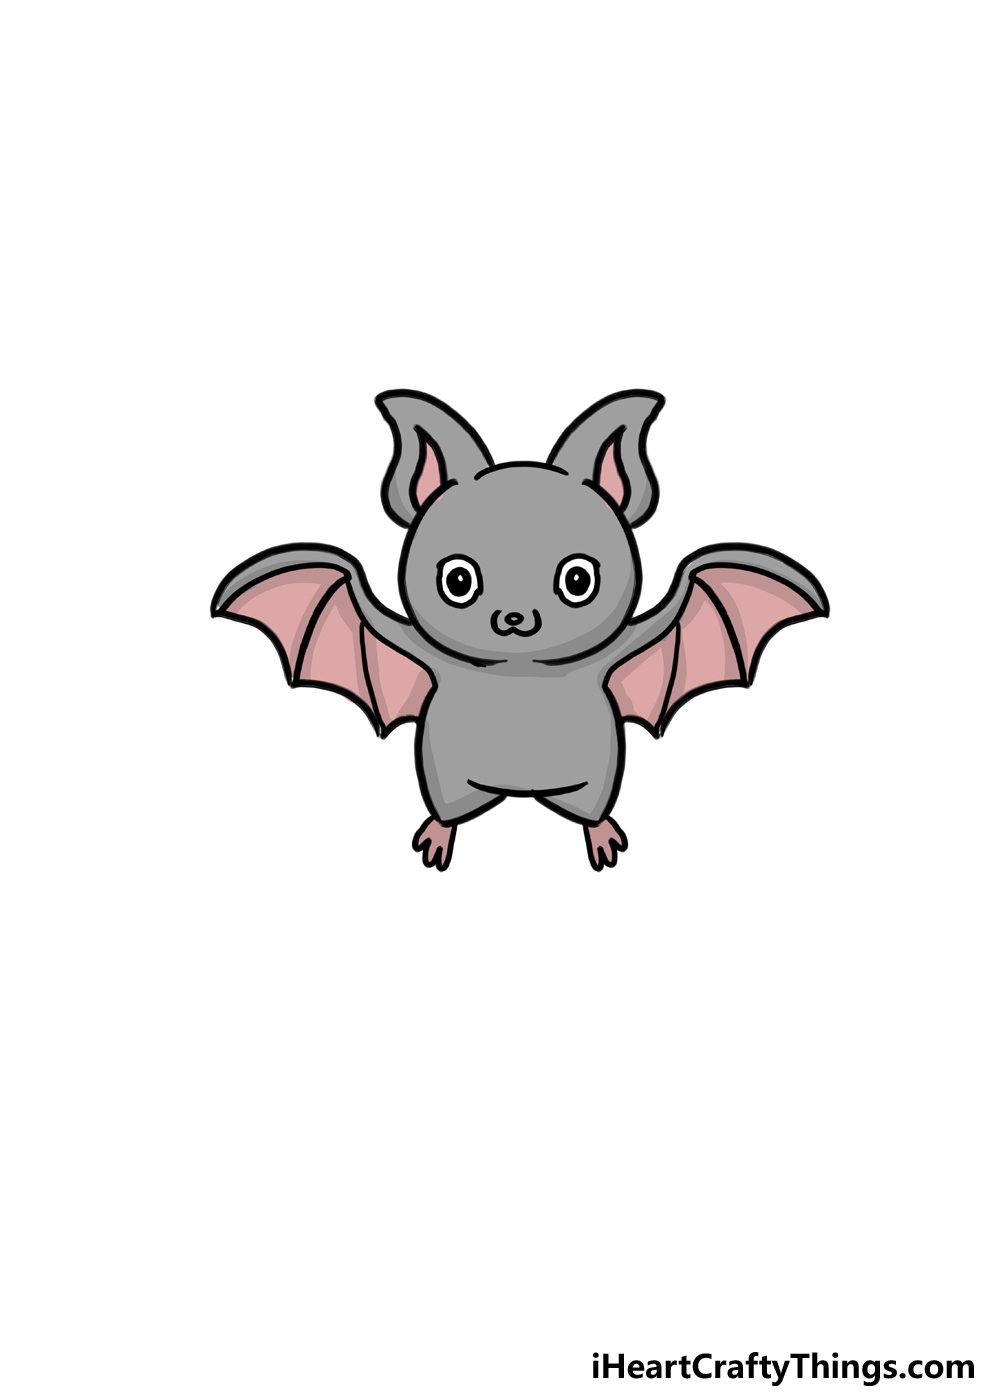 How to Draw A Cute Bat step 6